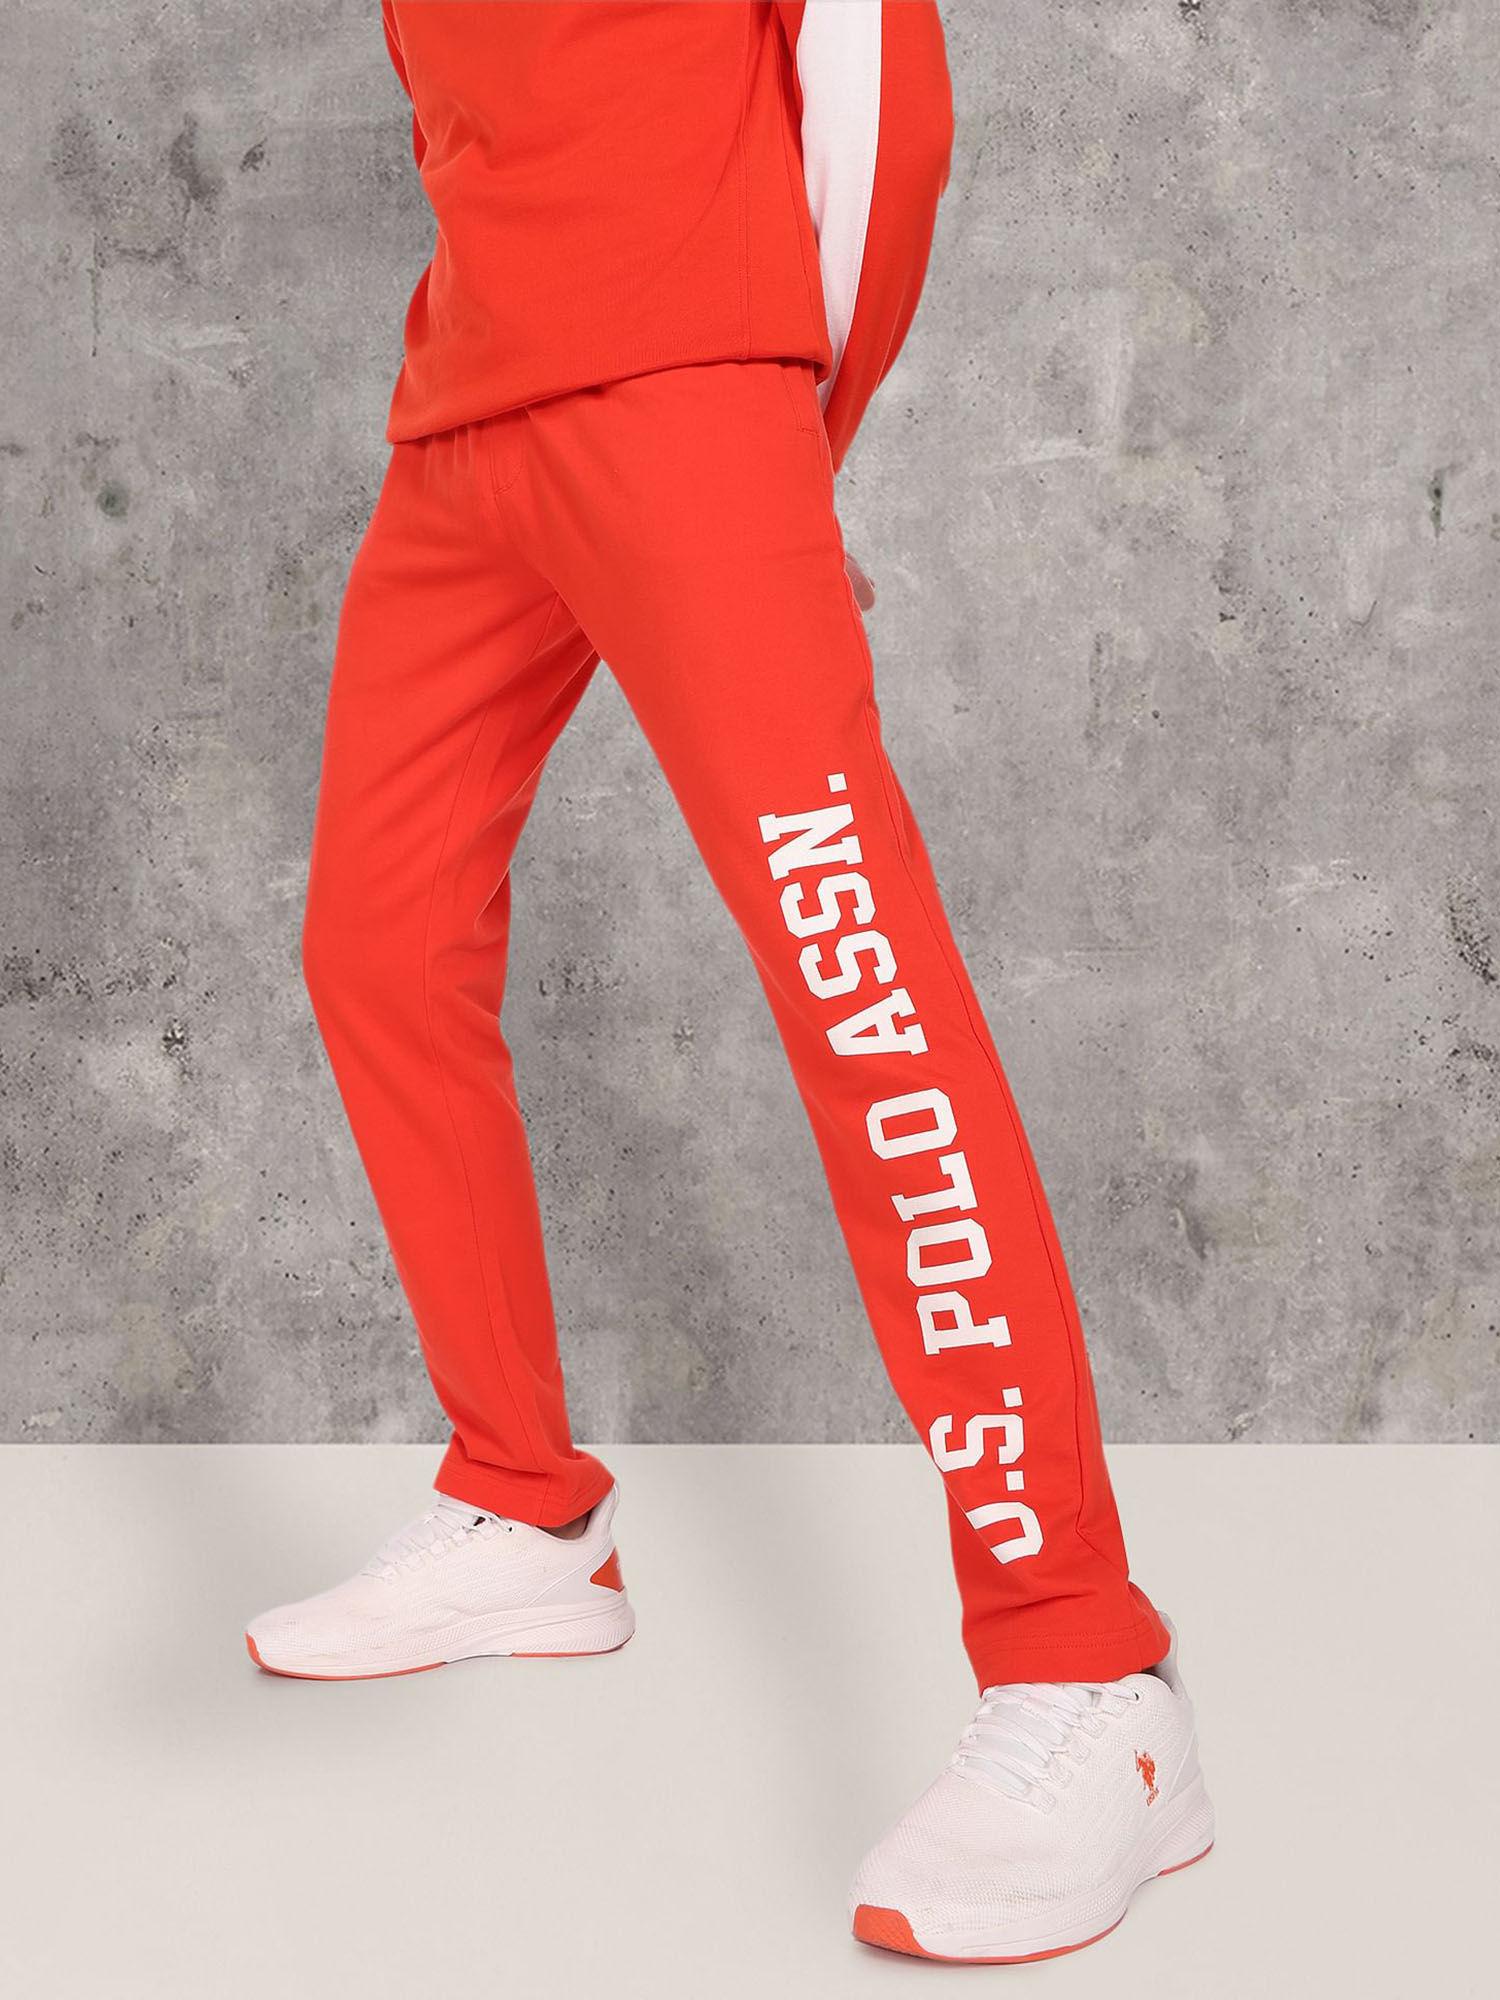 collegiate-cotton-red-track-pants